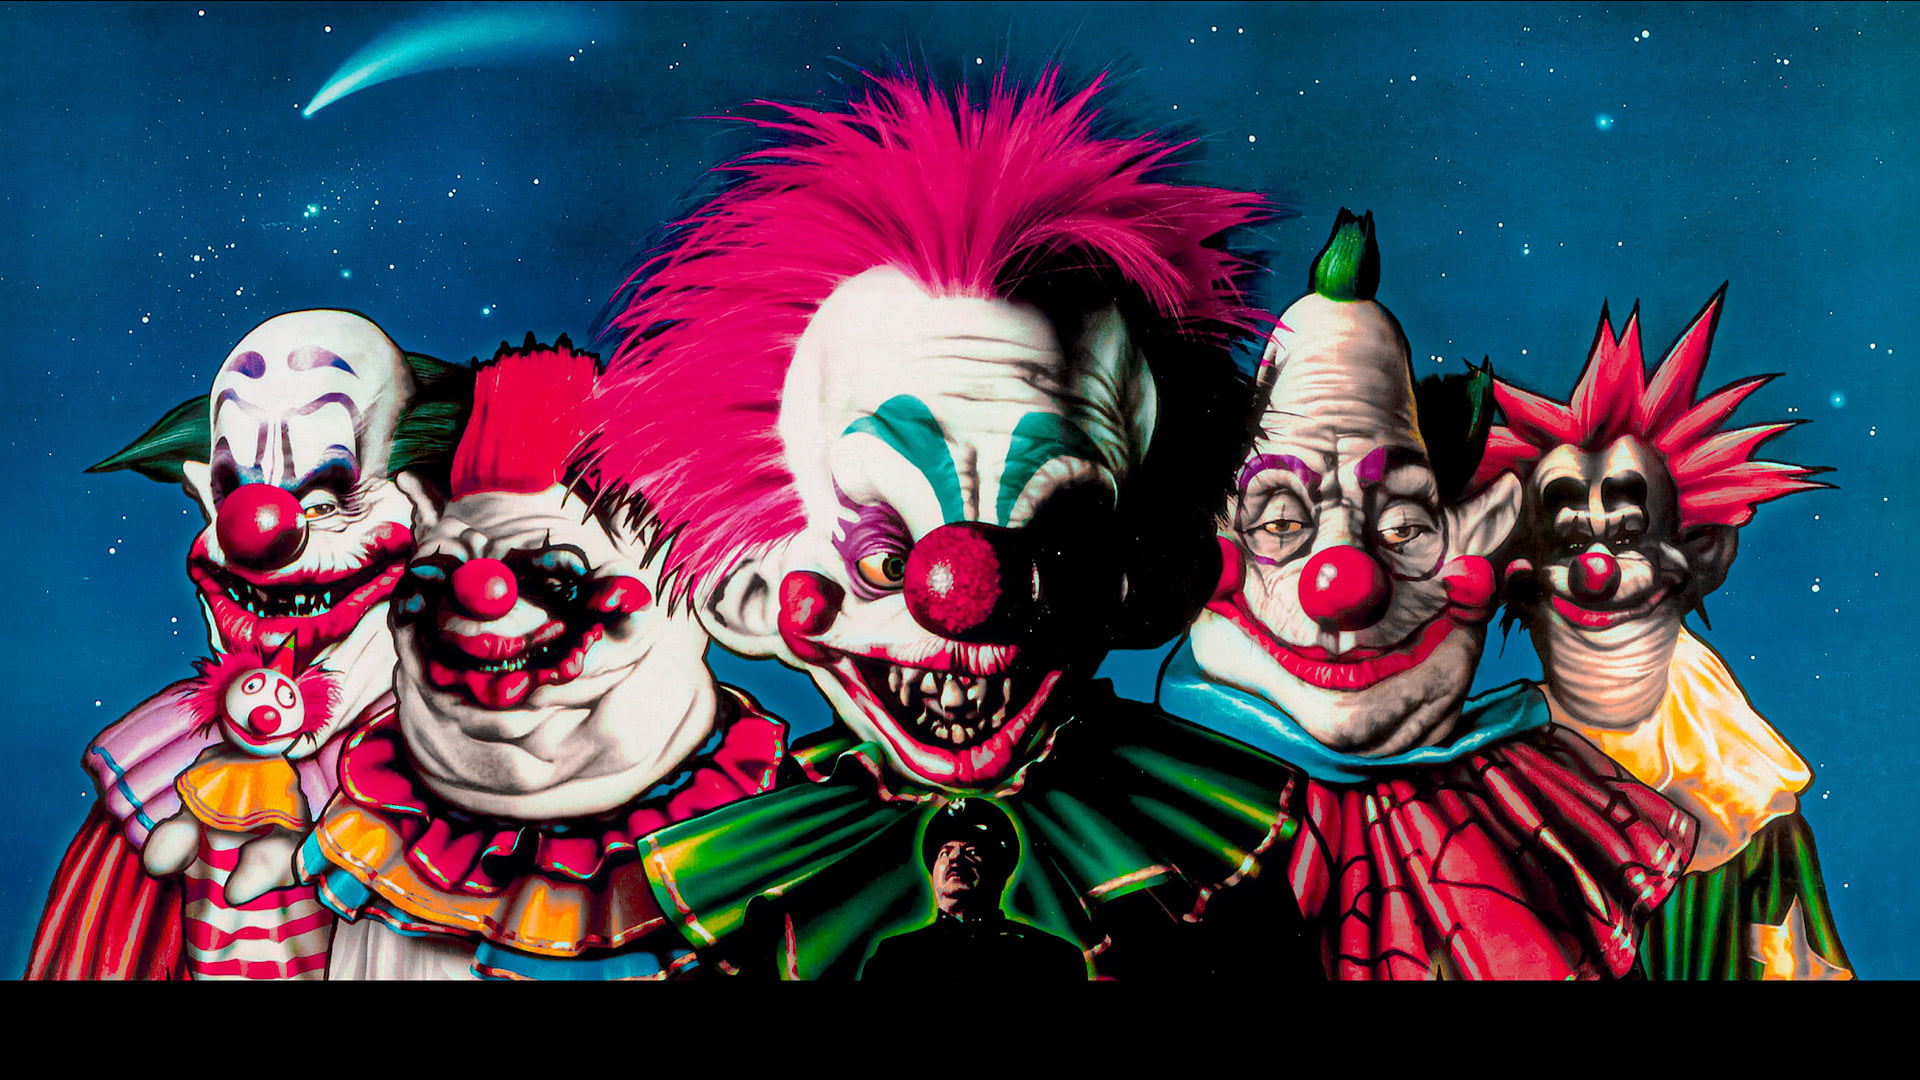 Image du film Les Clowns tueurs venus d'ailleurs wpqdqt3mdlk8hgfwzqxouo0r6wdjpg